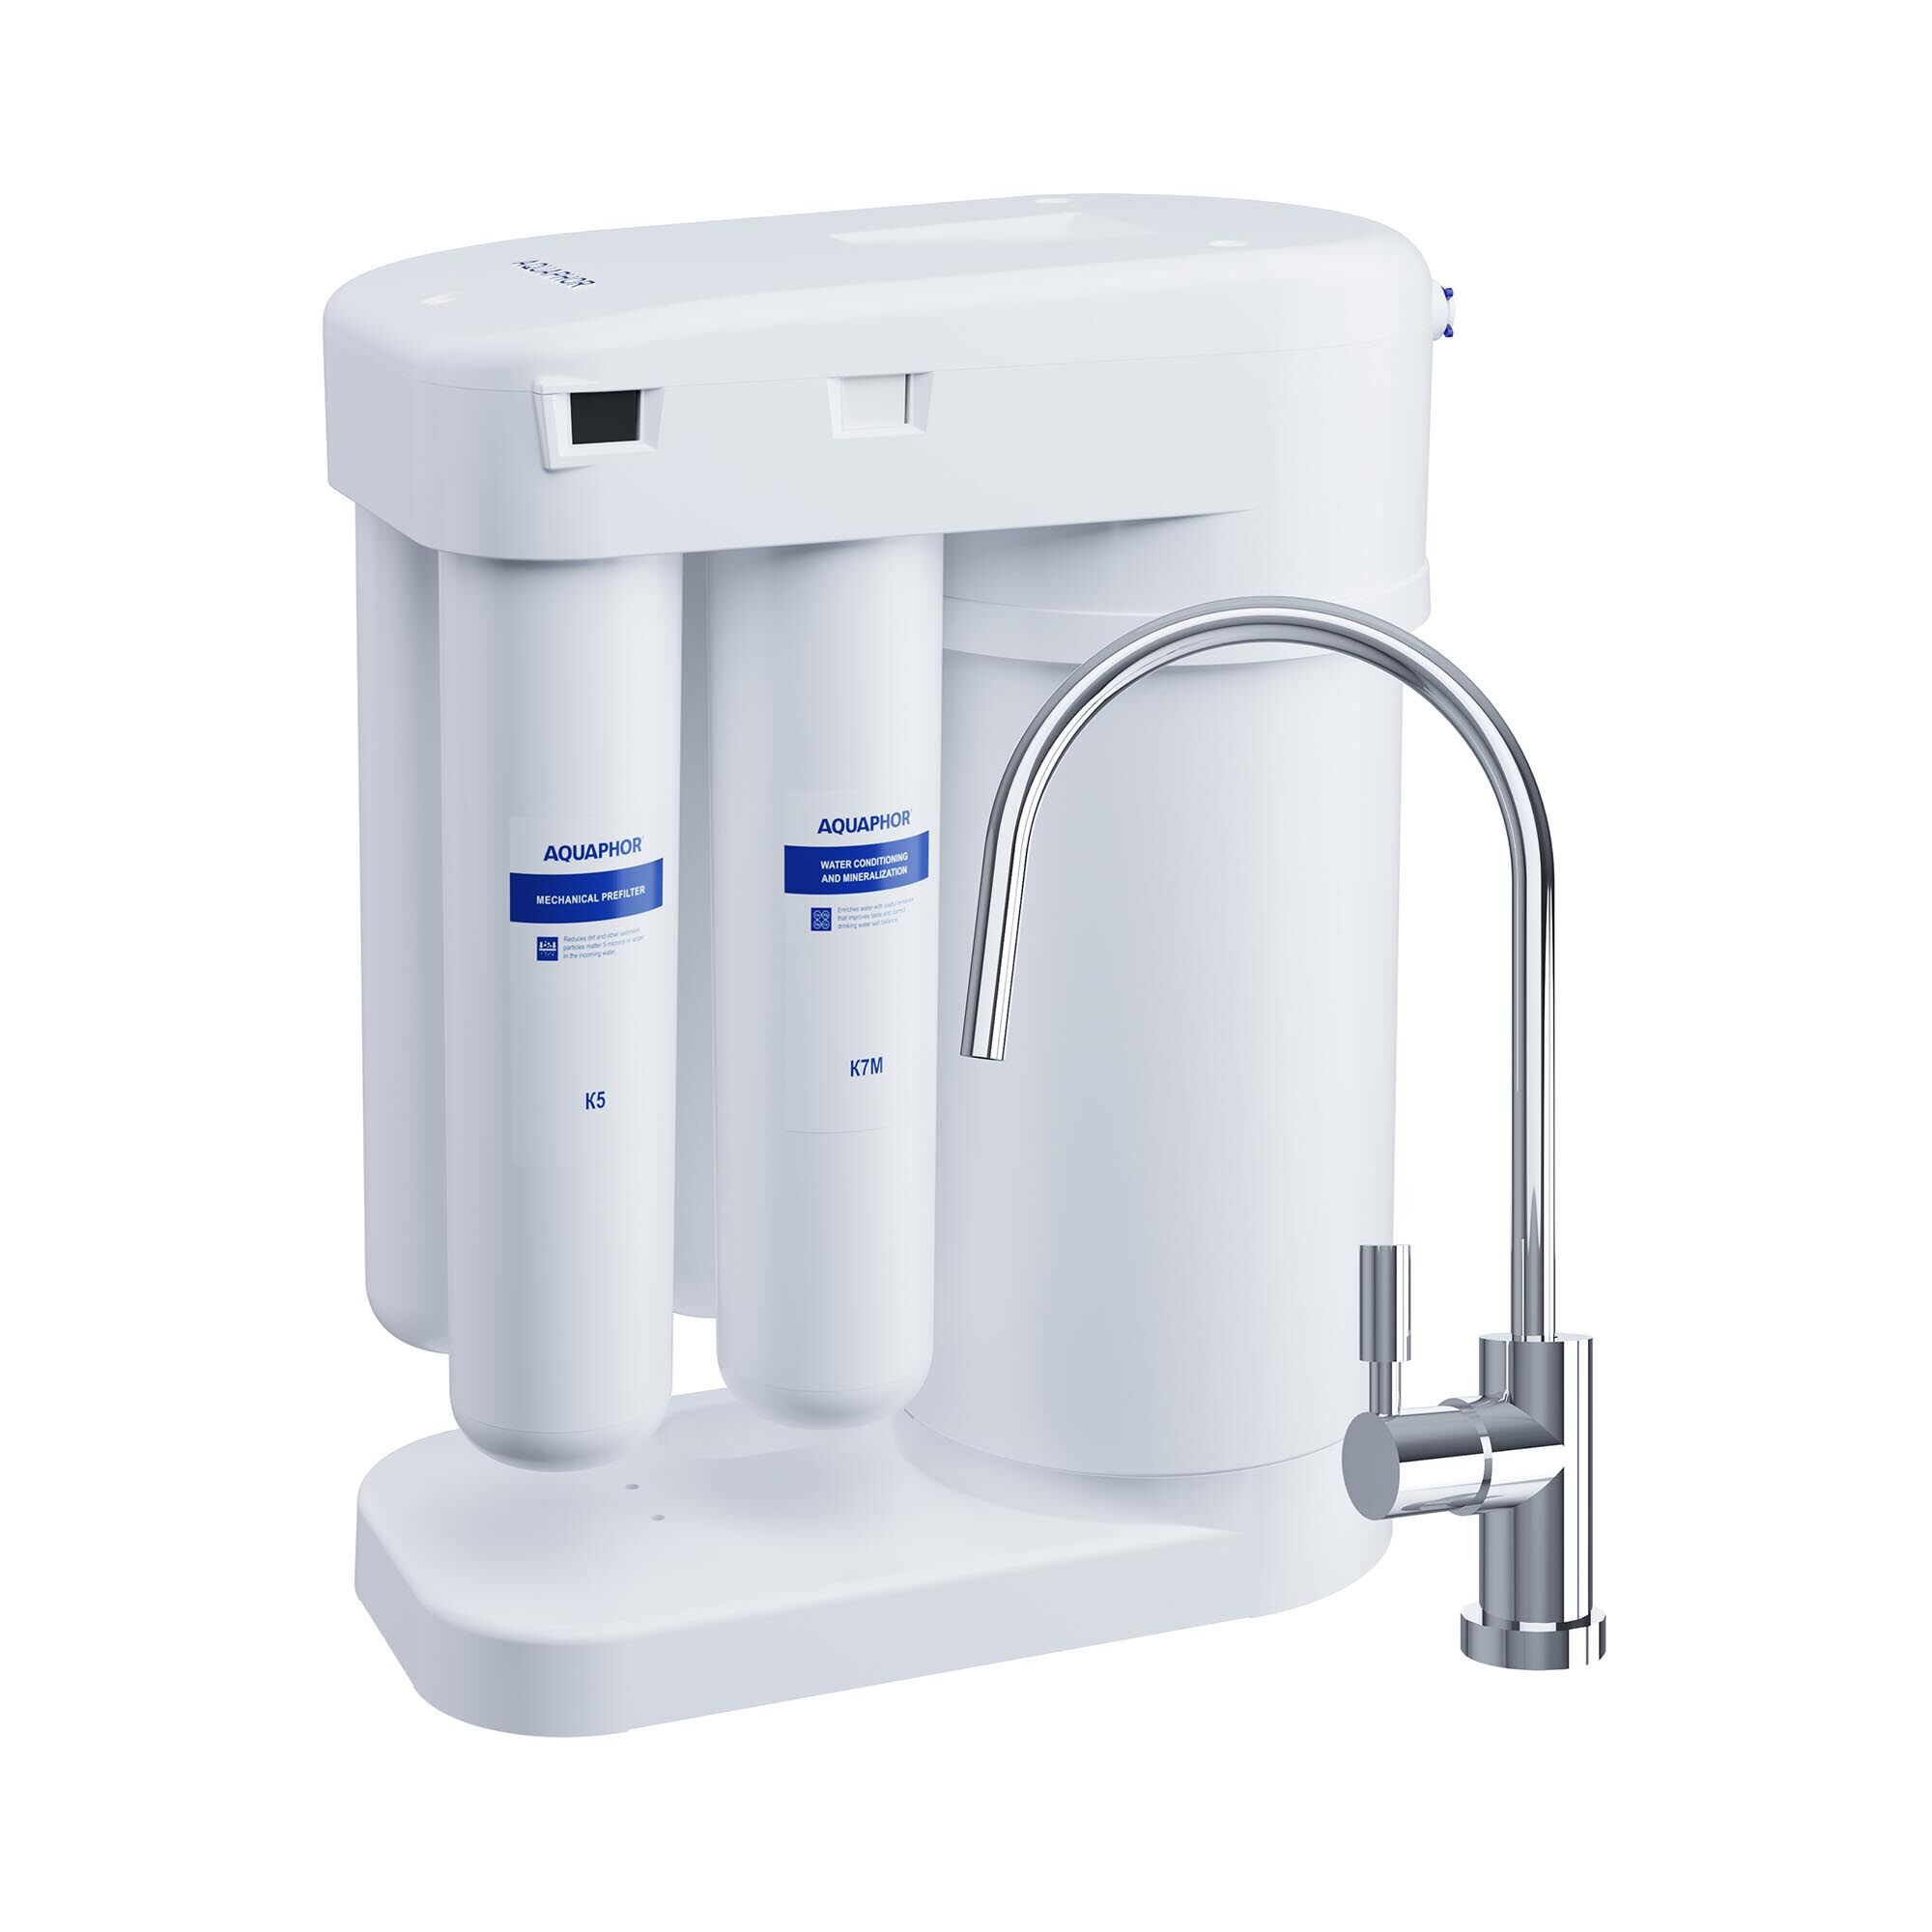 Aquaphor Umkehrosmoseanlage - 190 L/Tag - mit Wasserhahn